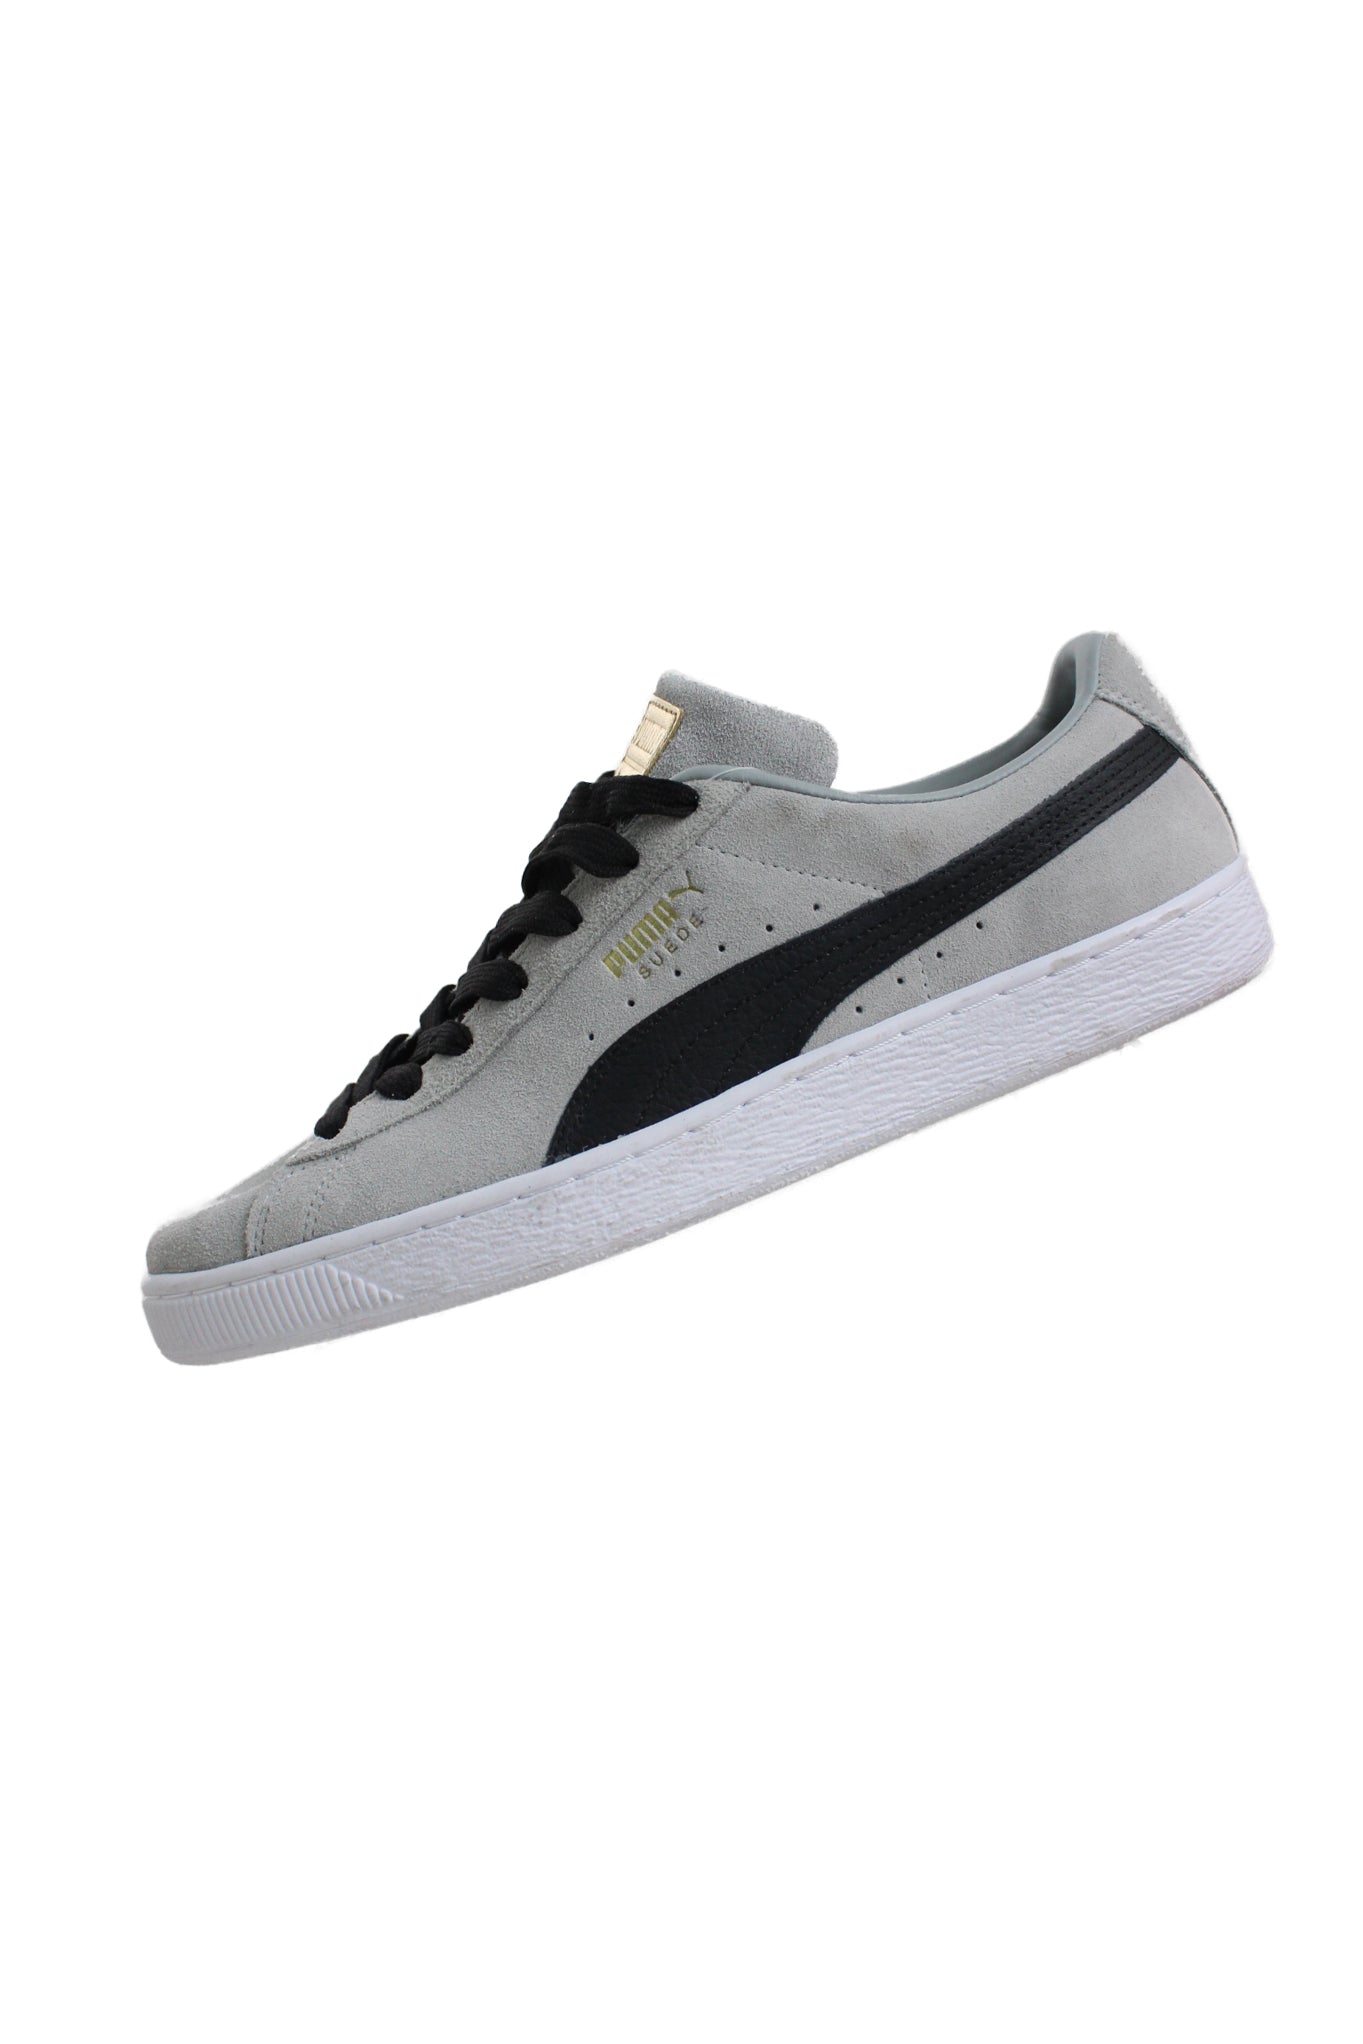 side angle of puma light grey/black/white suede shoes. features ‘puma’ logo tag at tongue, ‘puma suede’ logo at sides, ‘puma’ logo at heel, and top flat lace closure.  